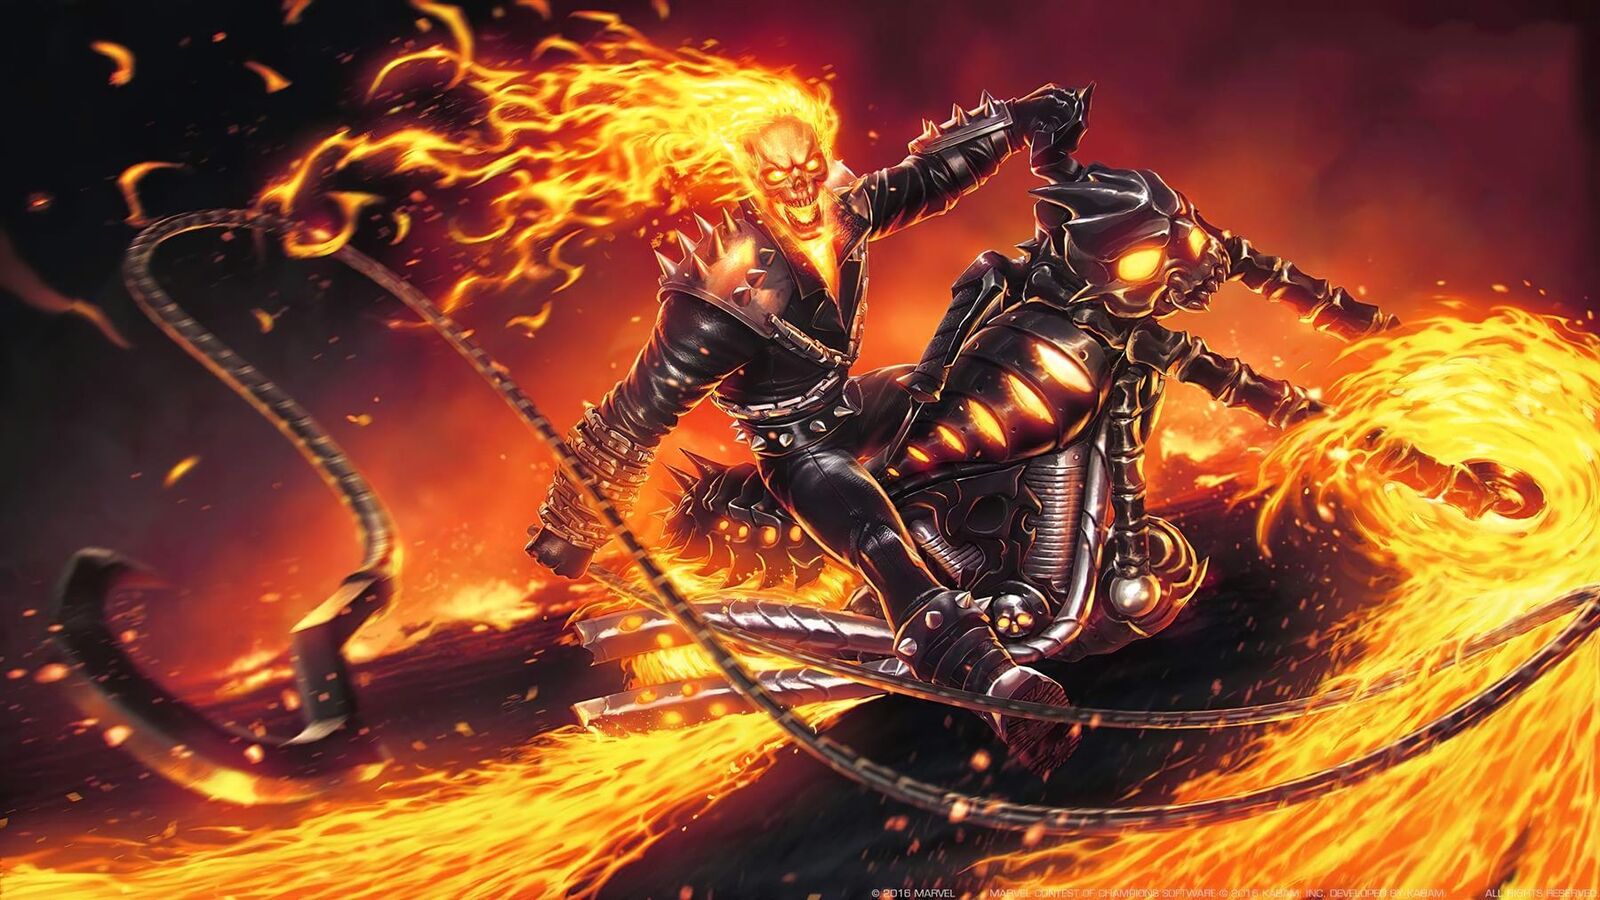 Ghost Rider Motorcycle Flaming Comics Art - Metal Print - 20cmx30cm  999900442